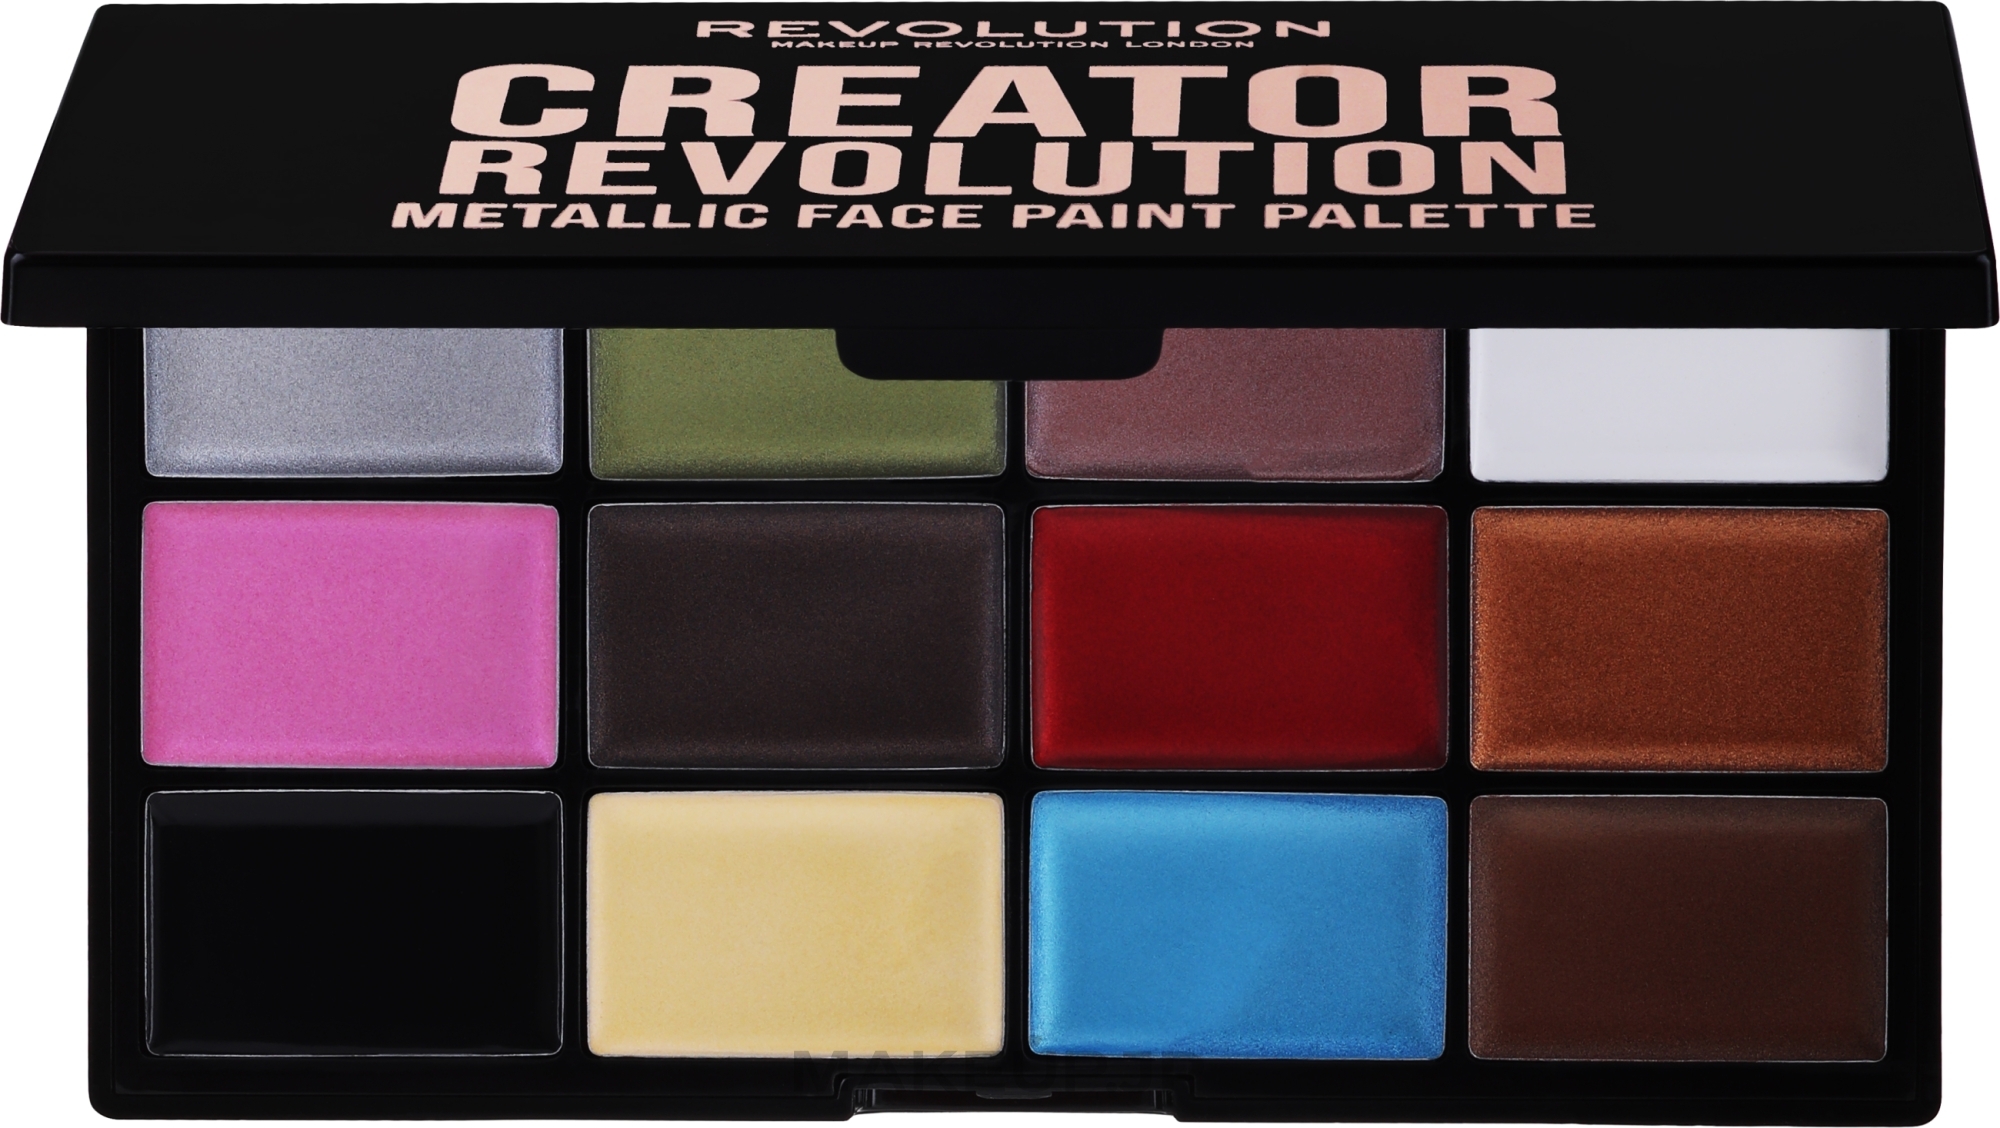 Metallic Face Paint Palette - Revolution Creator Revolution Metallic Face Paint Palette — photo 12 g